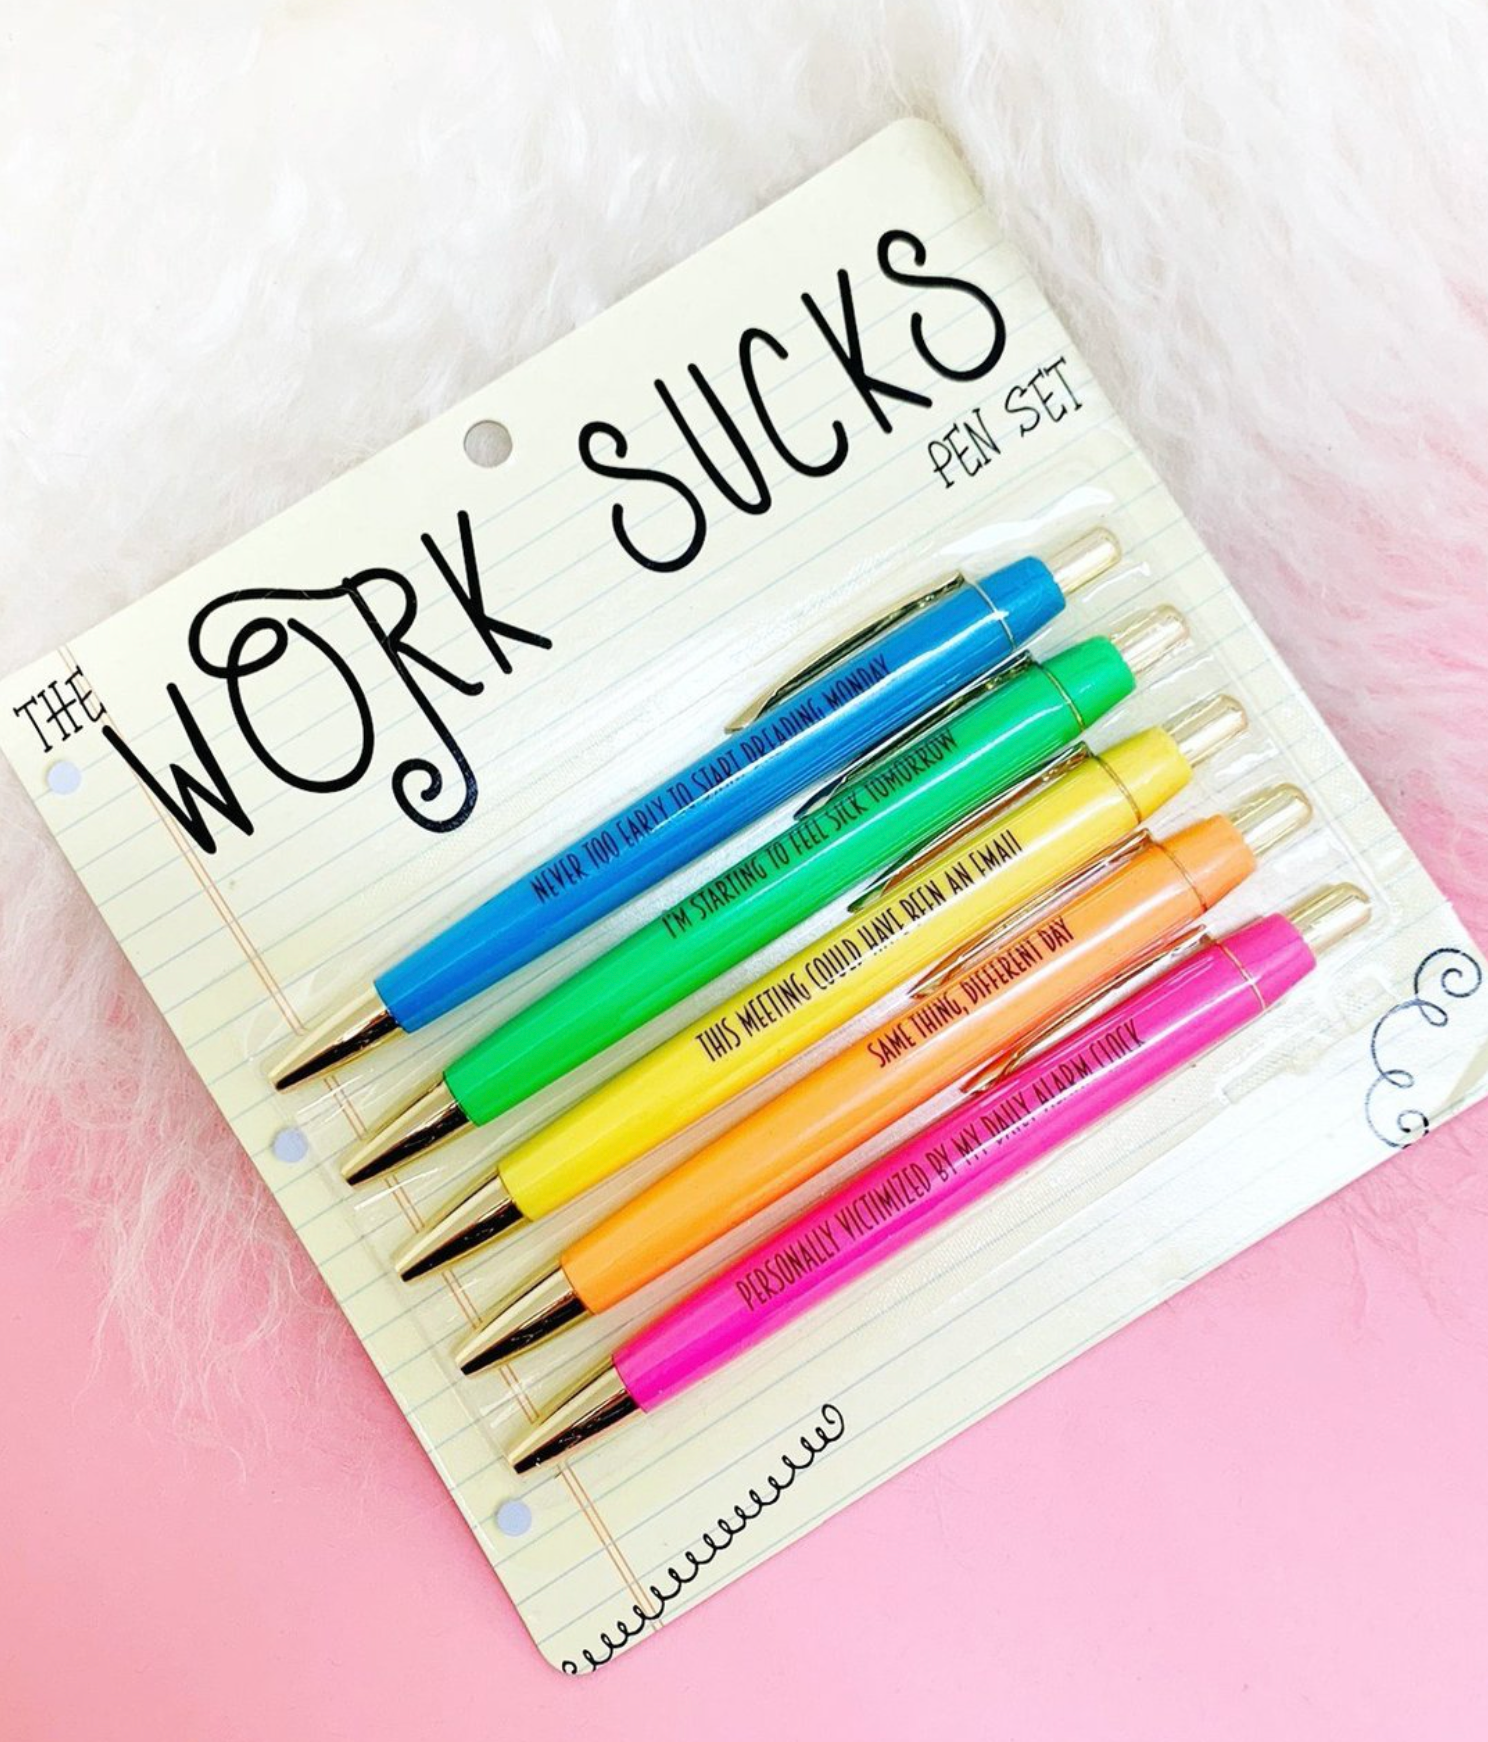 Work Sucks Pen Set – Shabby Chic Boutique and Tanning Salon